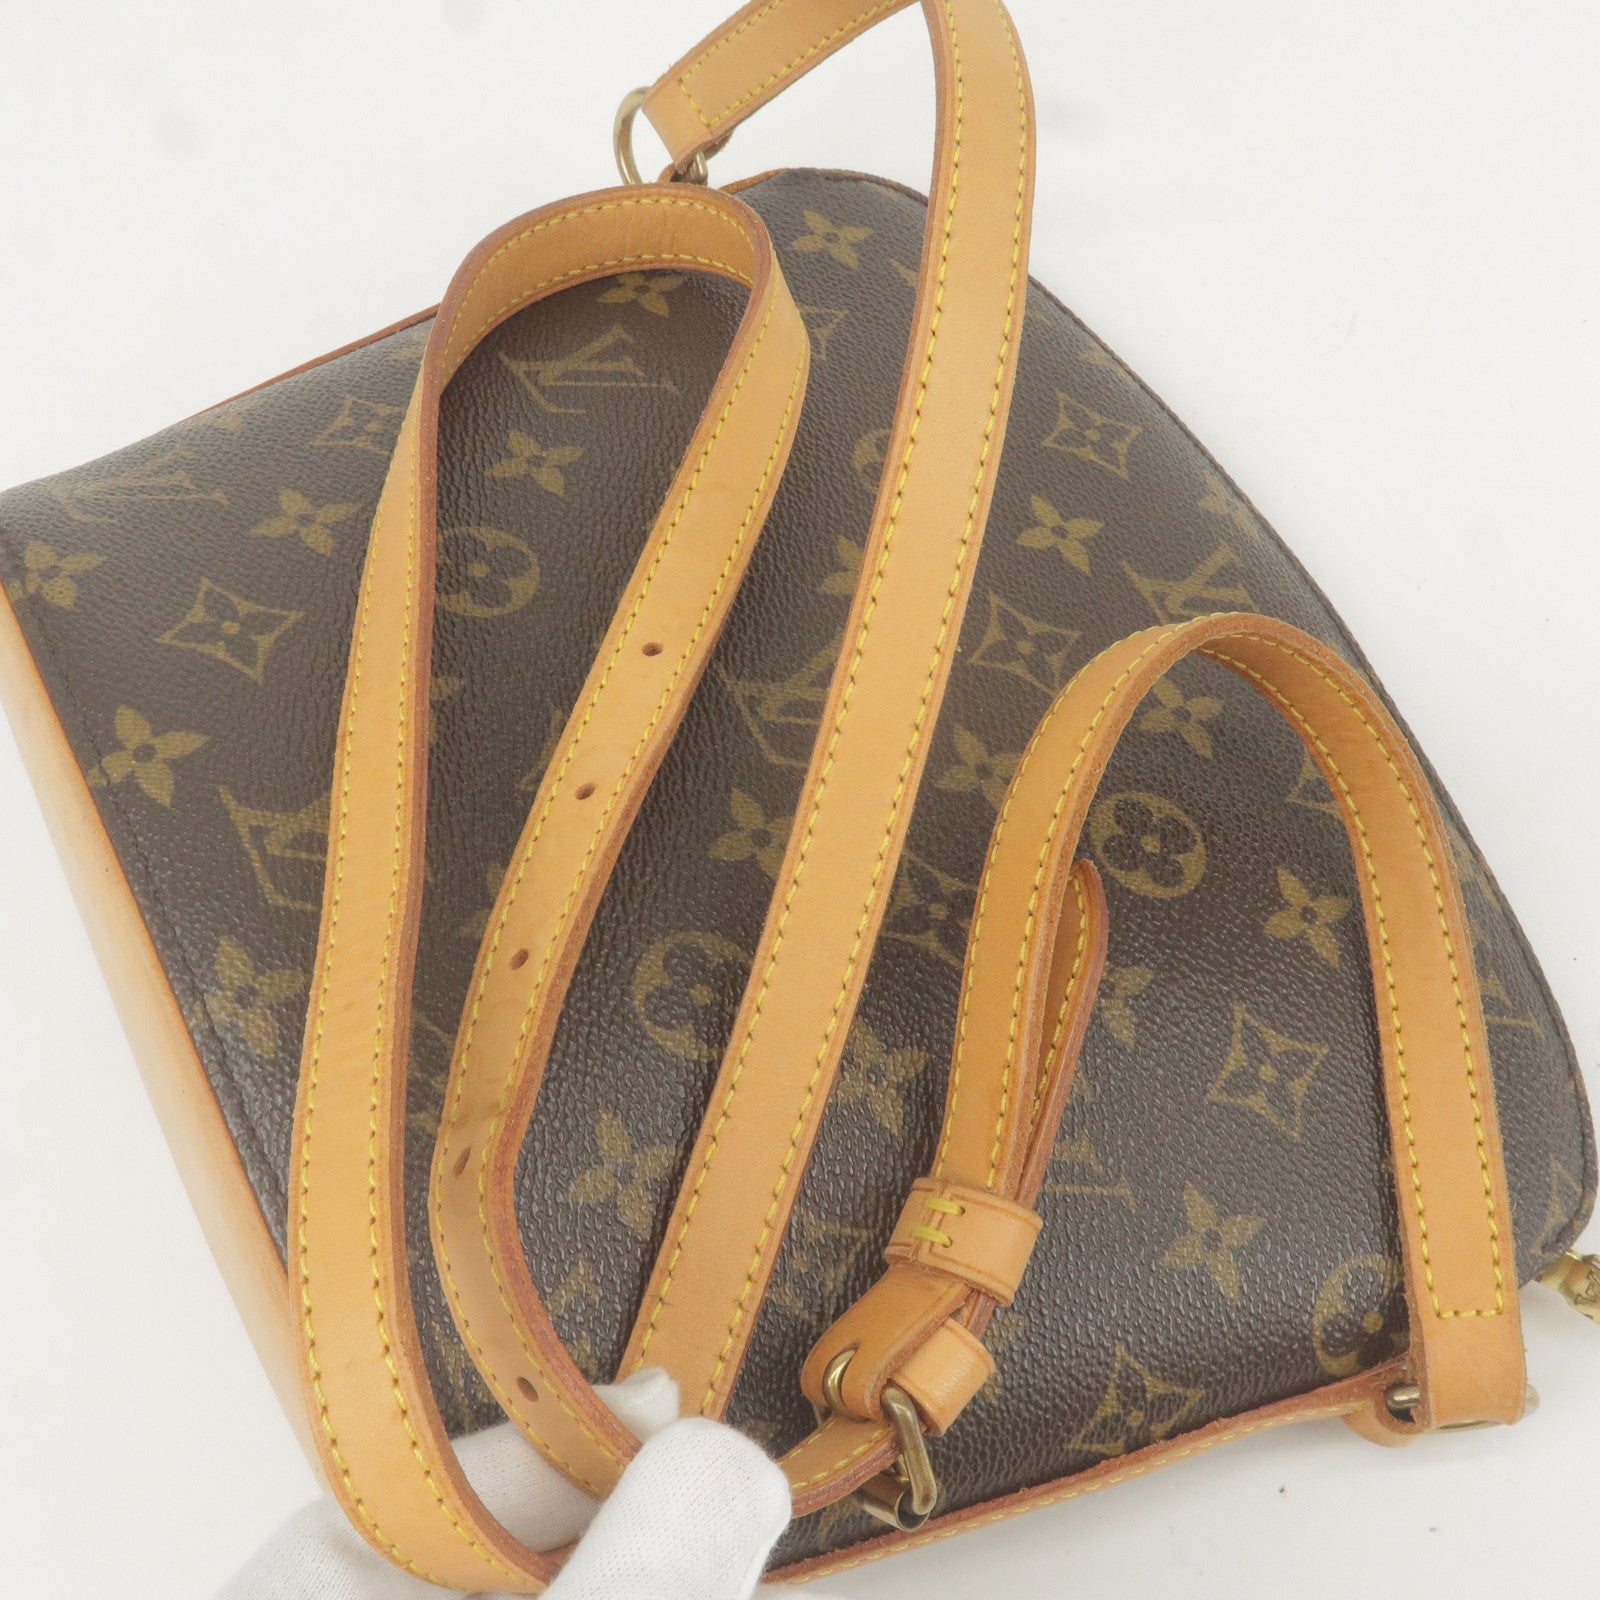 Louis Vuitton Drouot Crossbody Bag Monogram M51290 – Timeless